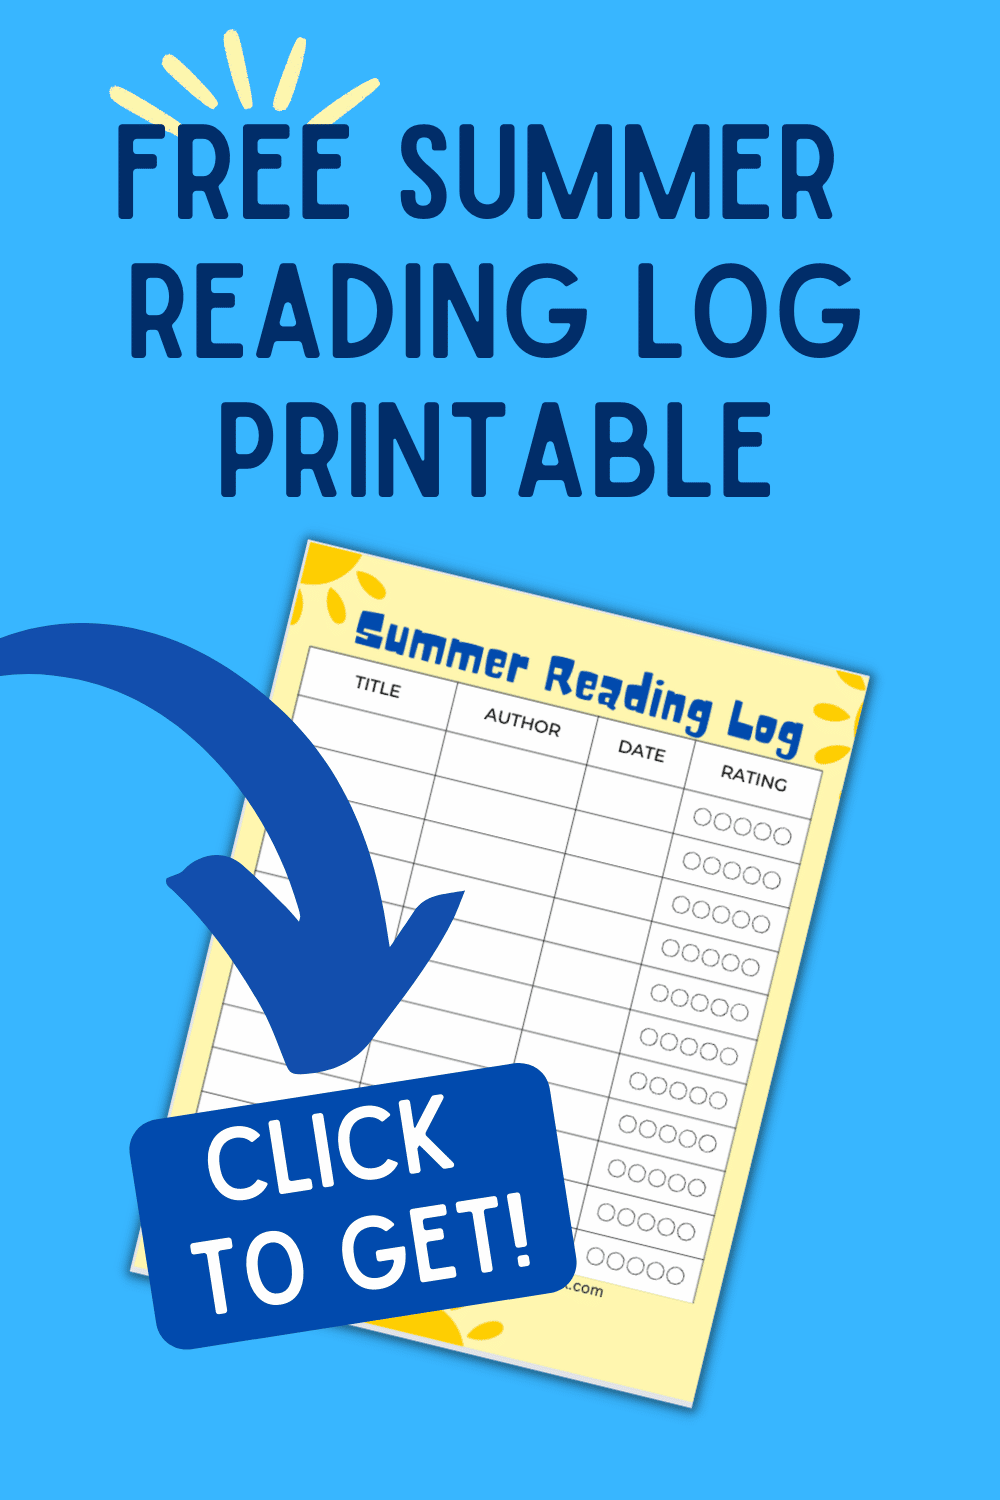 Free Summer Reading Log Printable (summer reading challenge tracker)